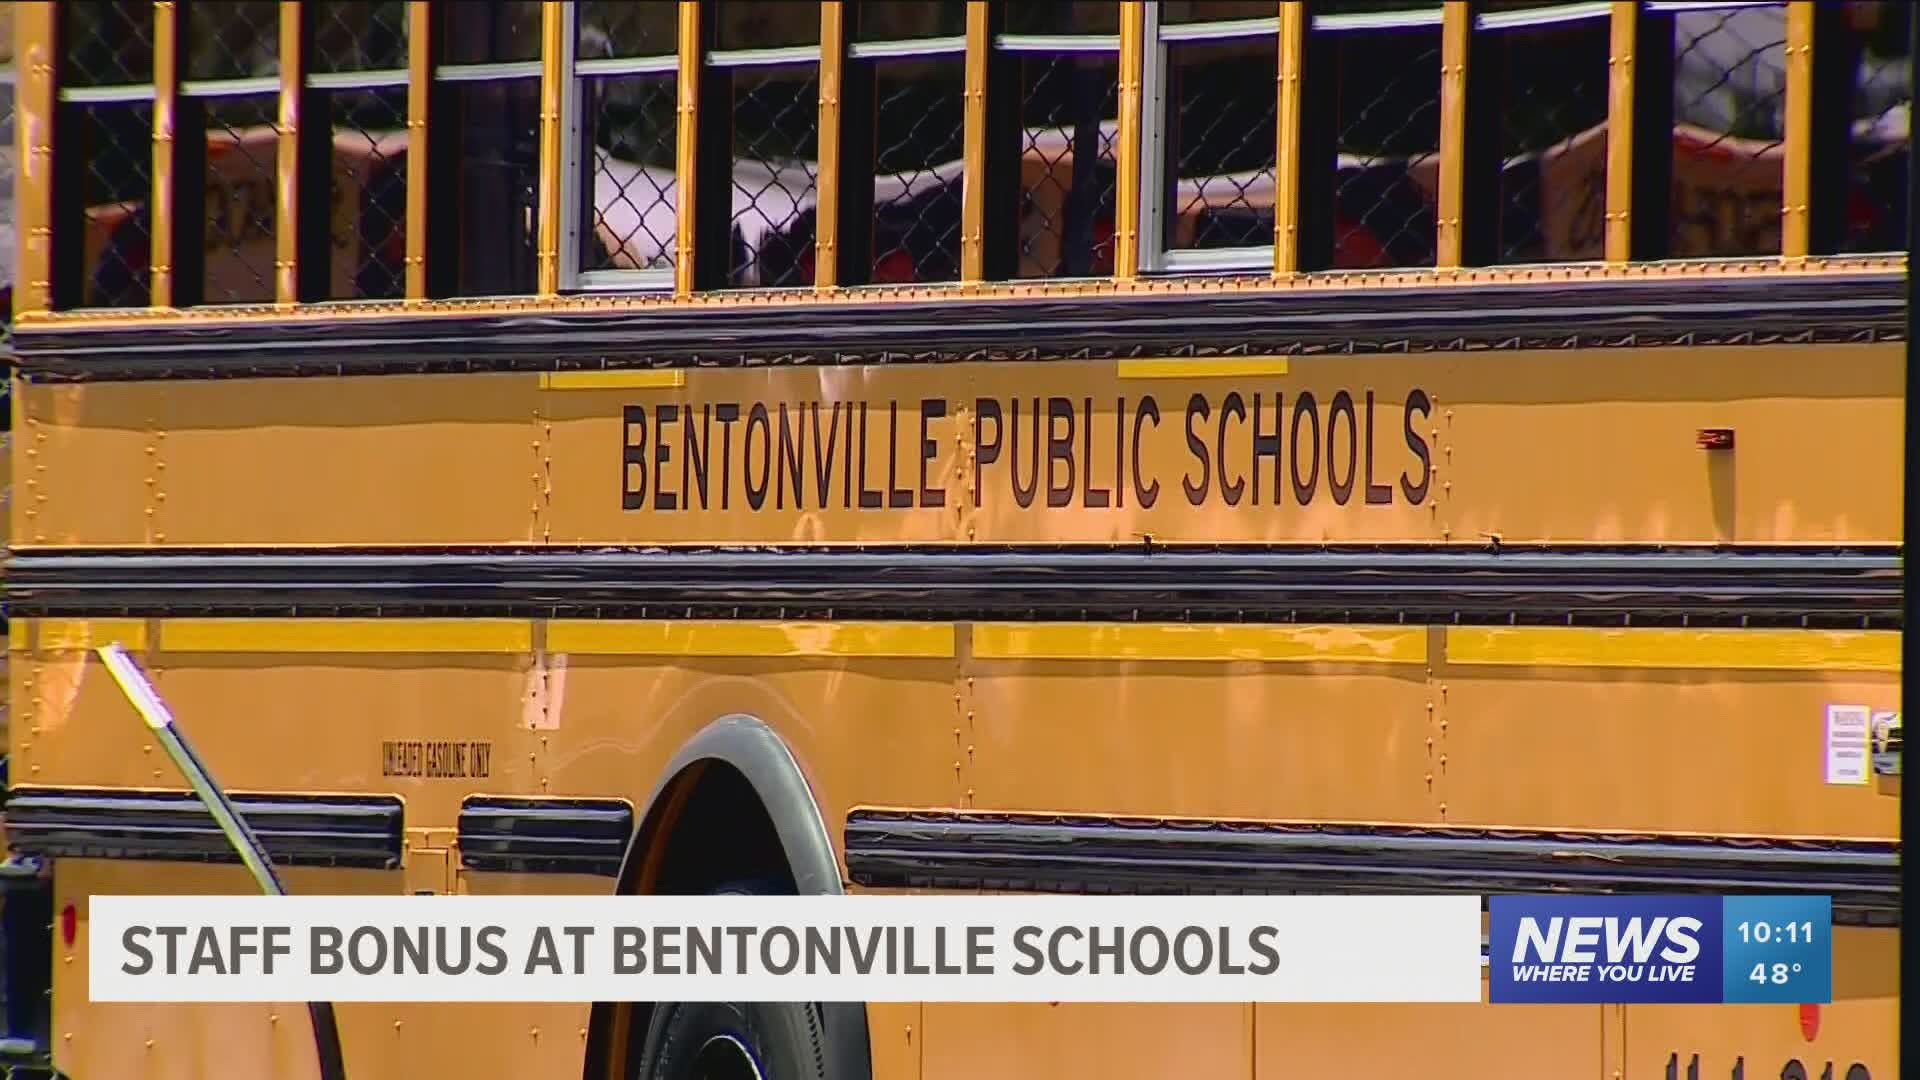 Bentonville School teachers and staff to receive bonuses this year